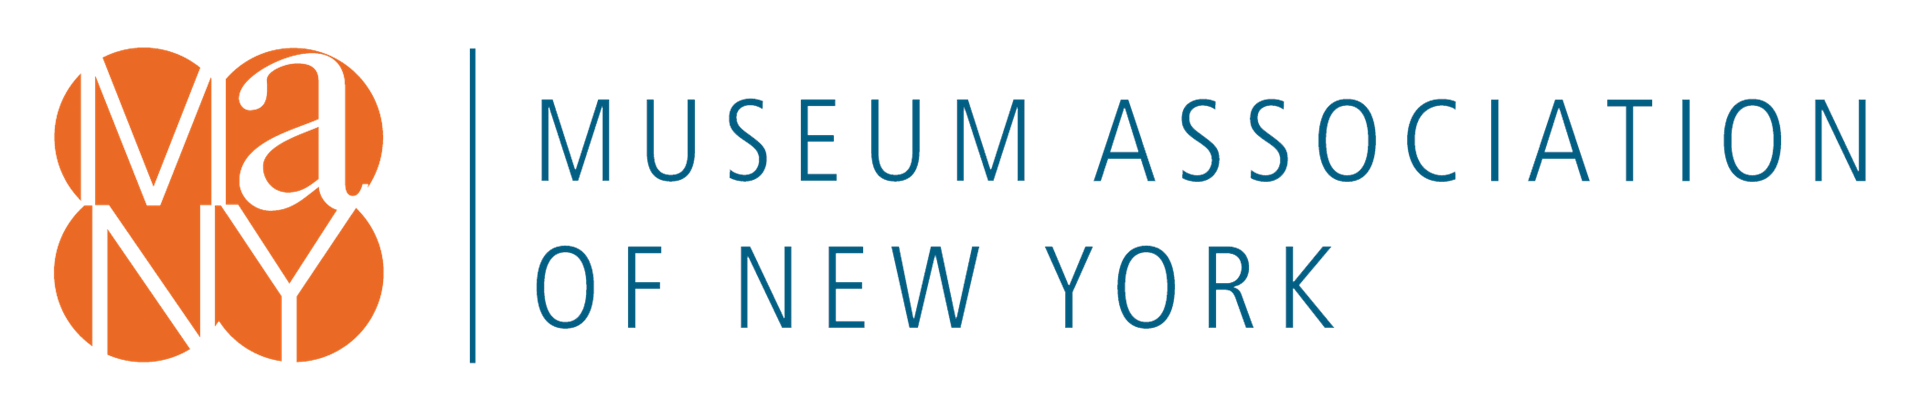 Museum Association of New York logo